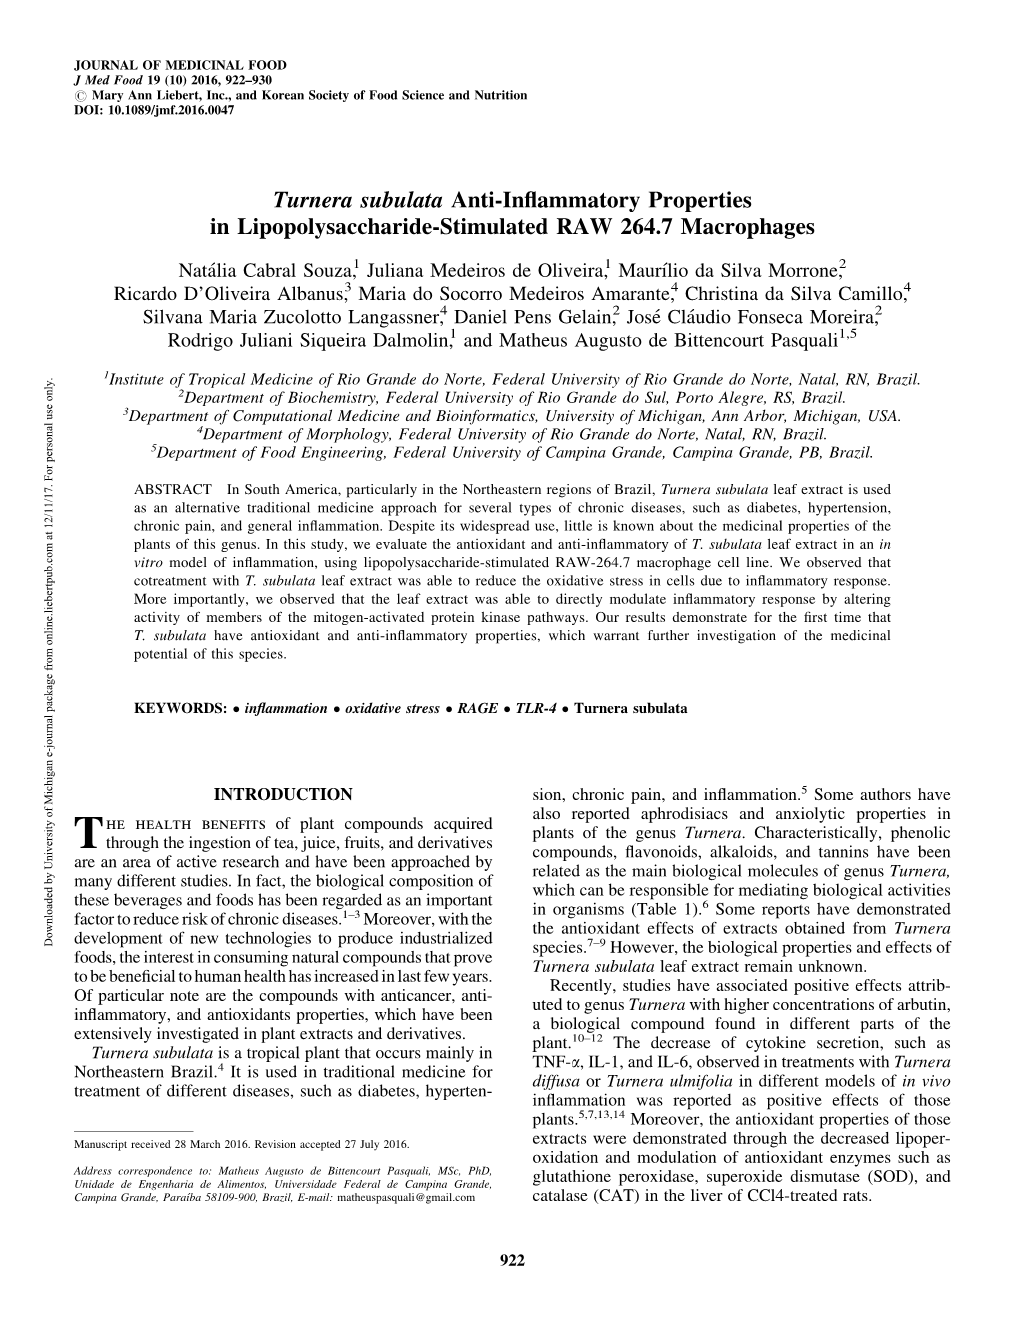 Turnera Subulata Anti-Inflammatory Properties in Lipopolysaccharide